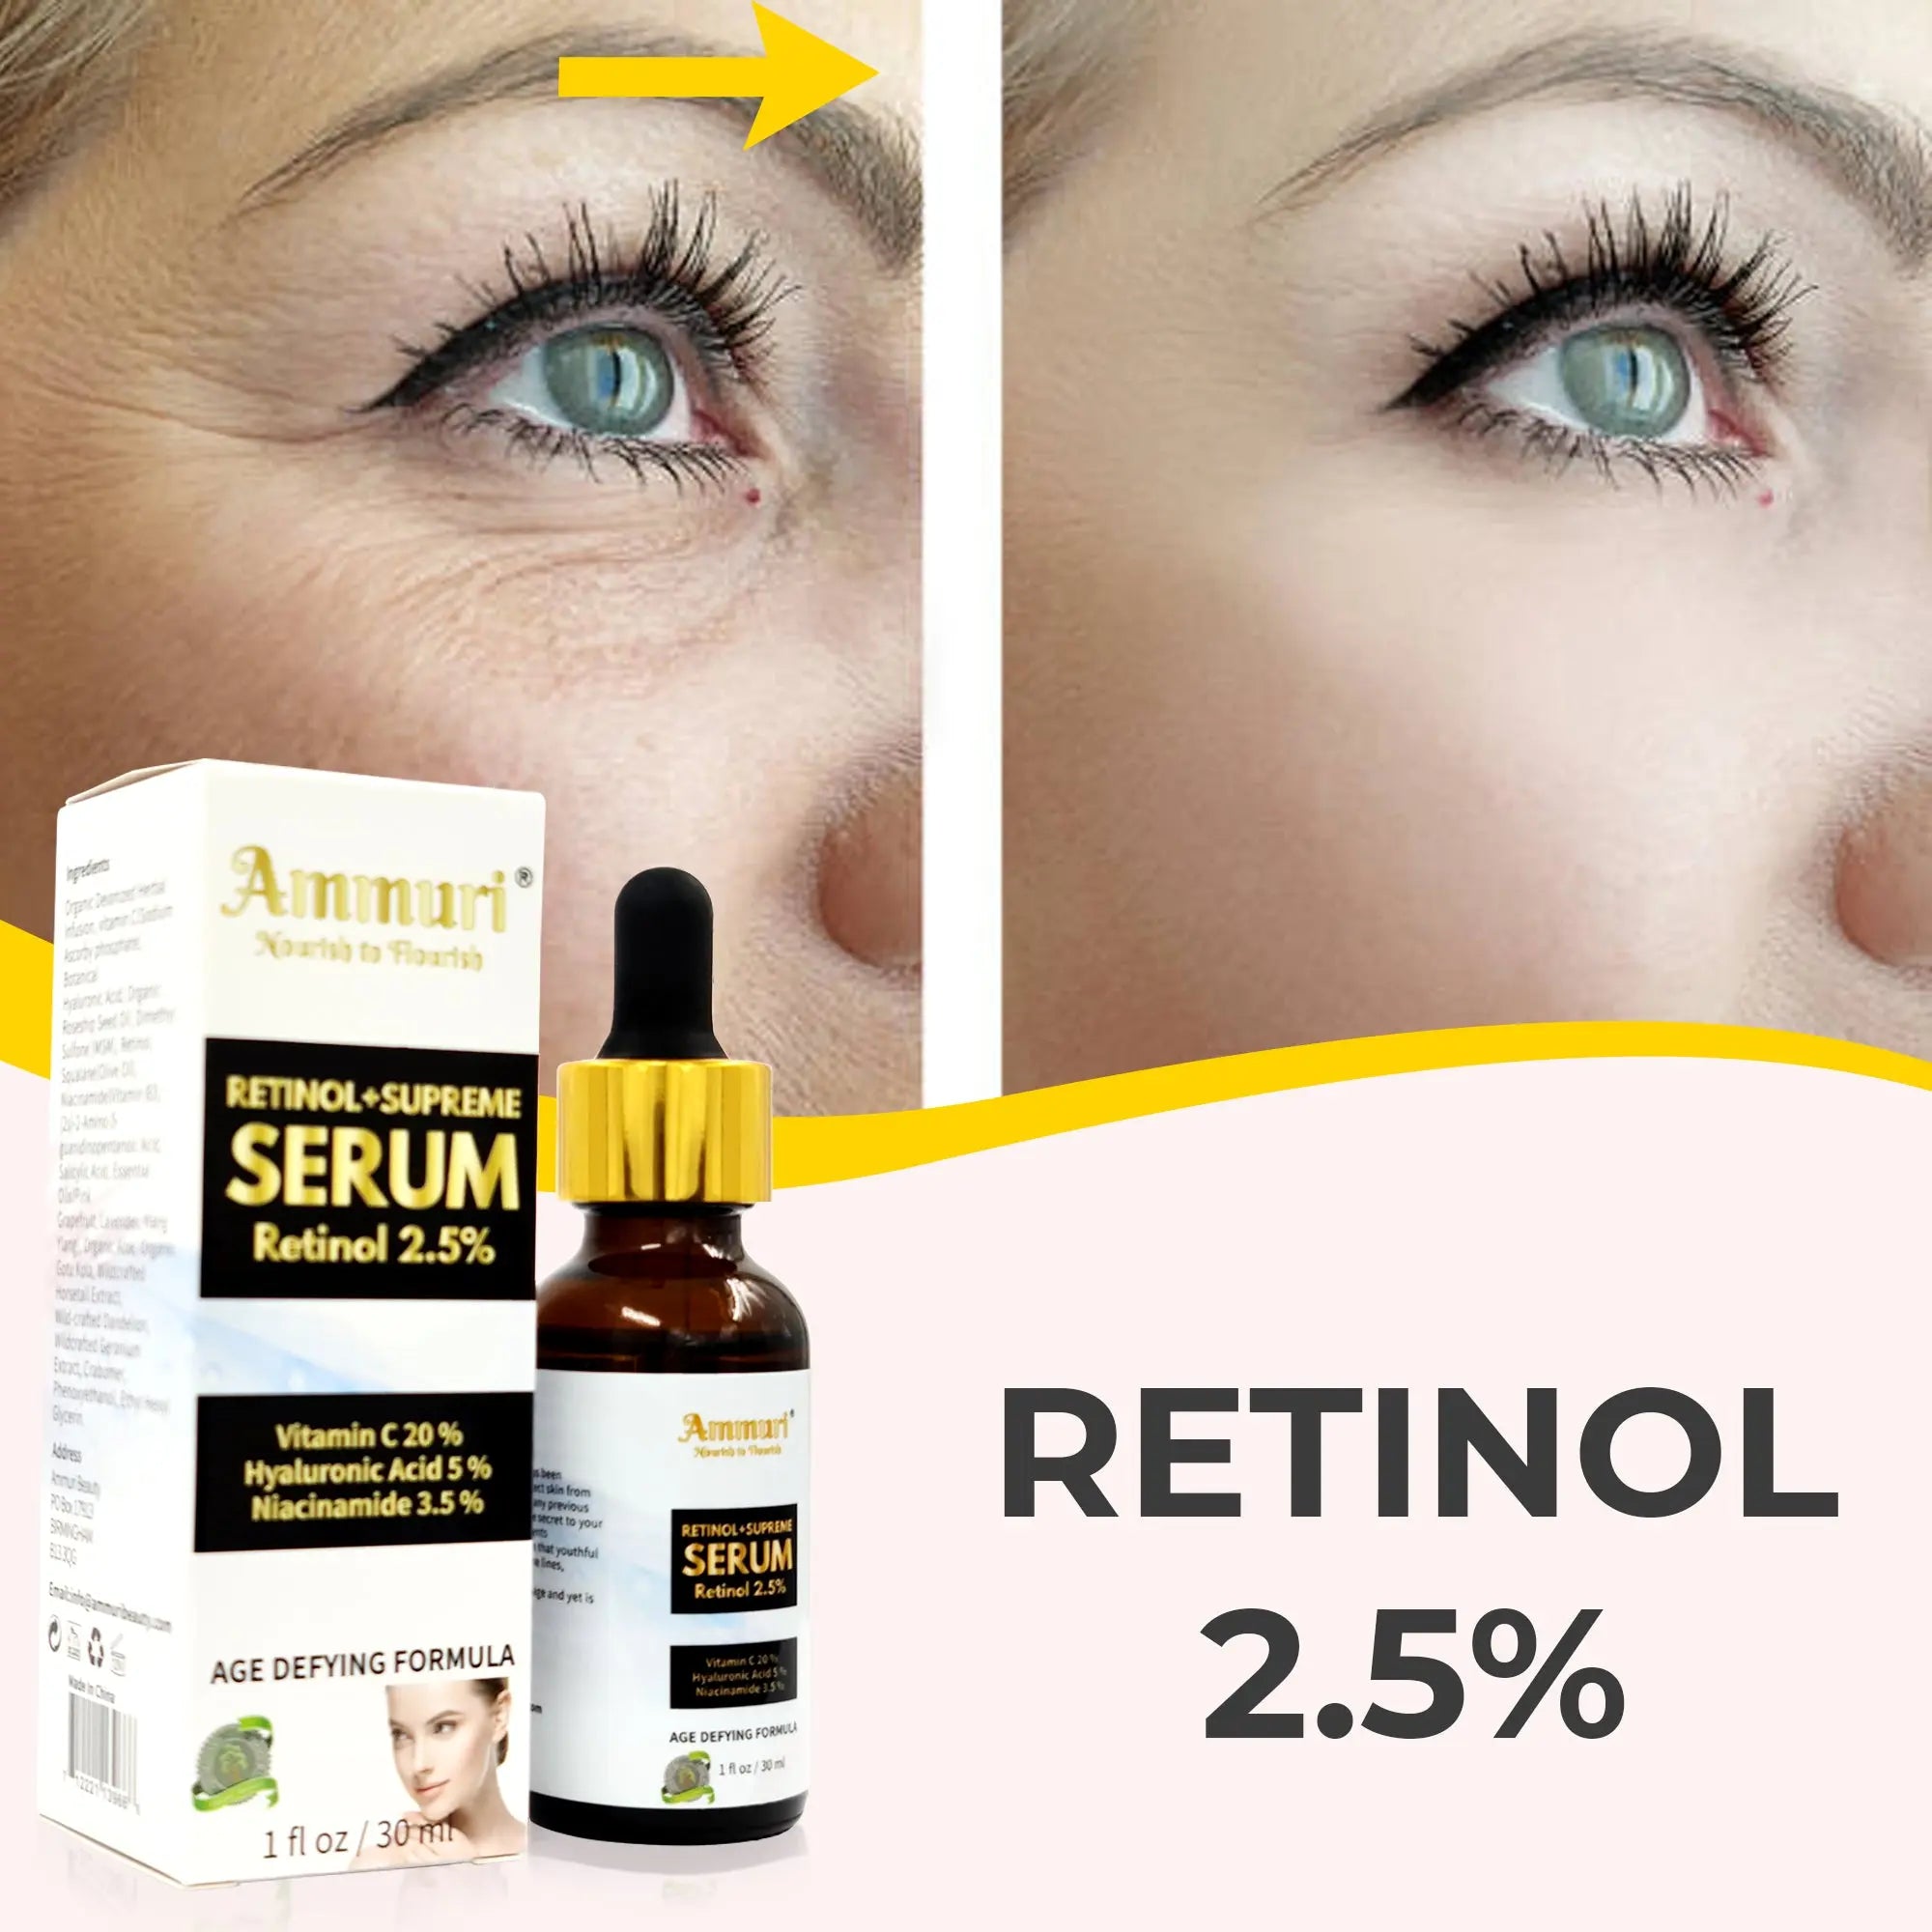 Ammuri Anti Aging Retinol 2.5% Serum with Vitamin Hyaluronic Acid plus Niacinamide perfect beauty Ammuri Skincare